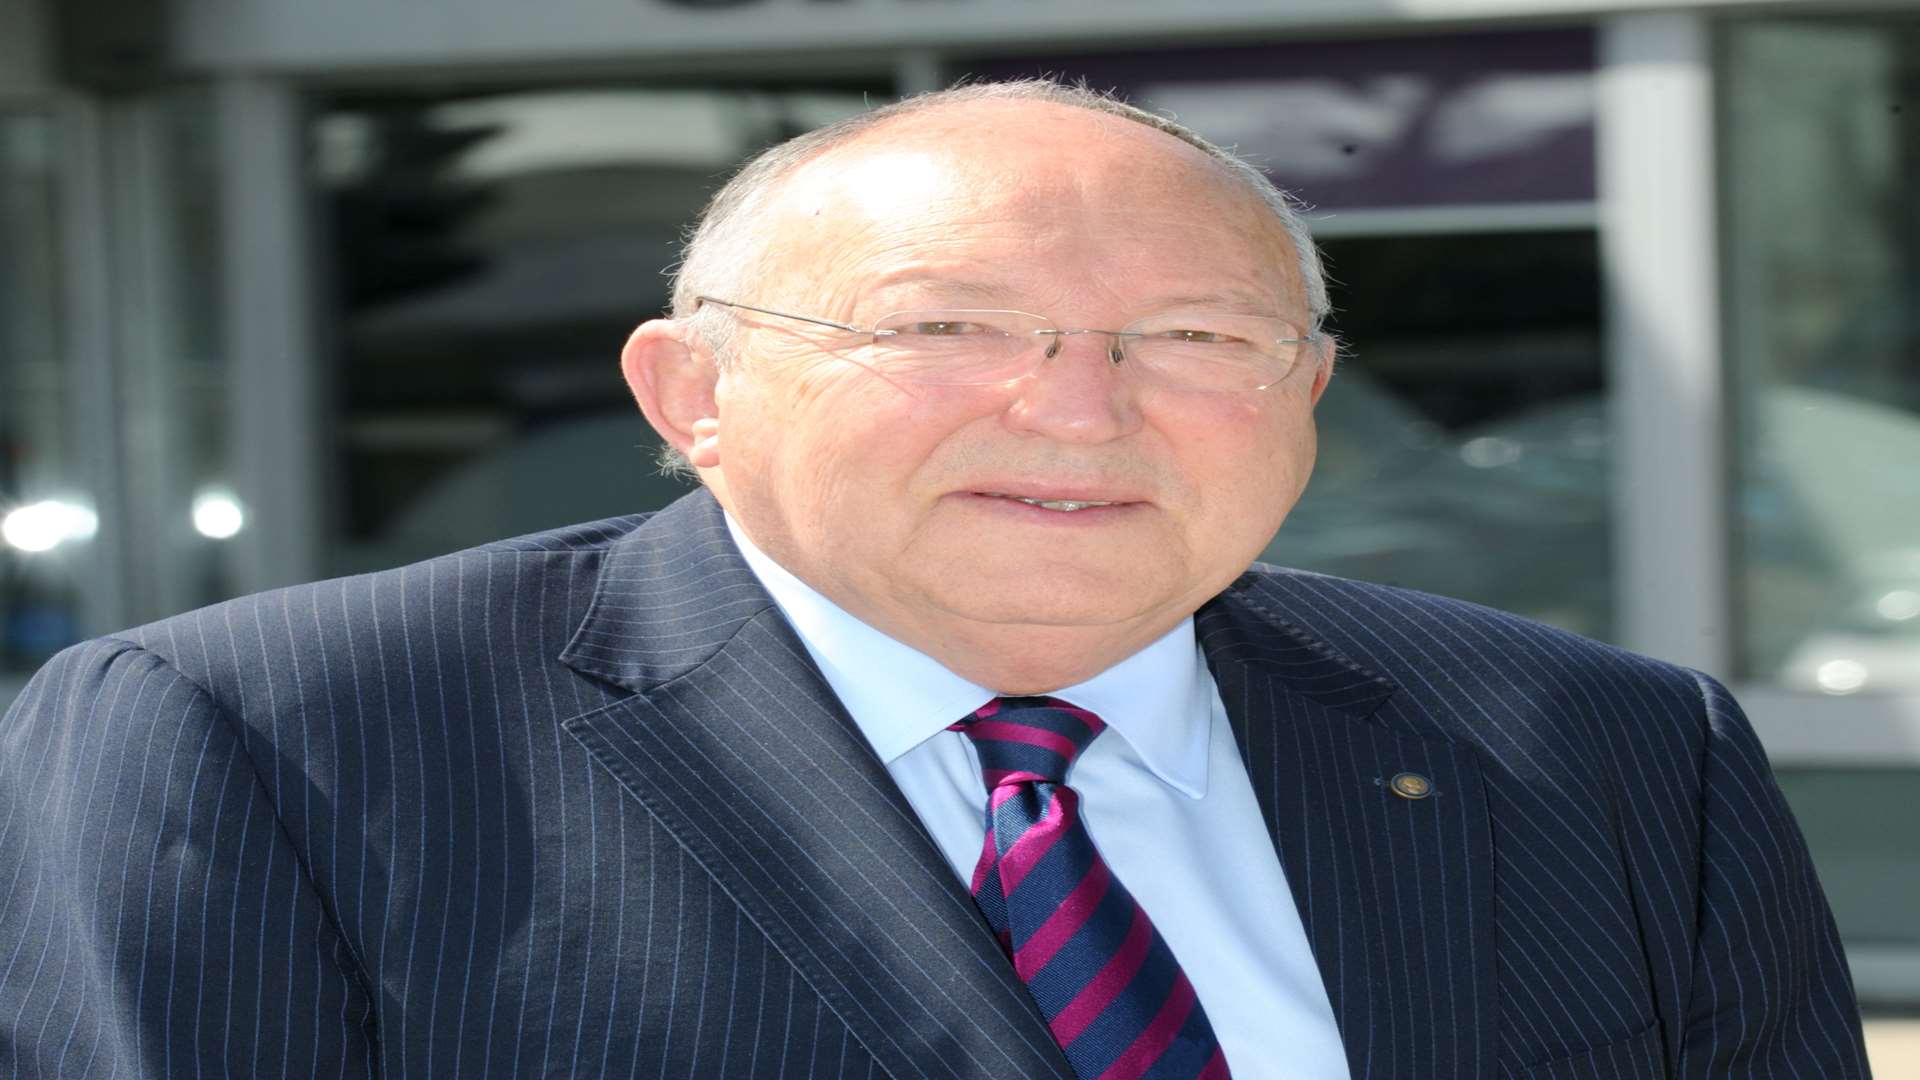 Leader of Gravesham council, Cllr John Cubitt